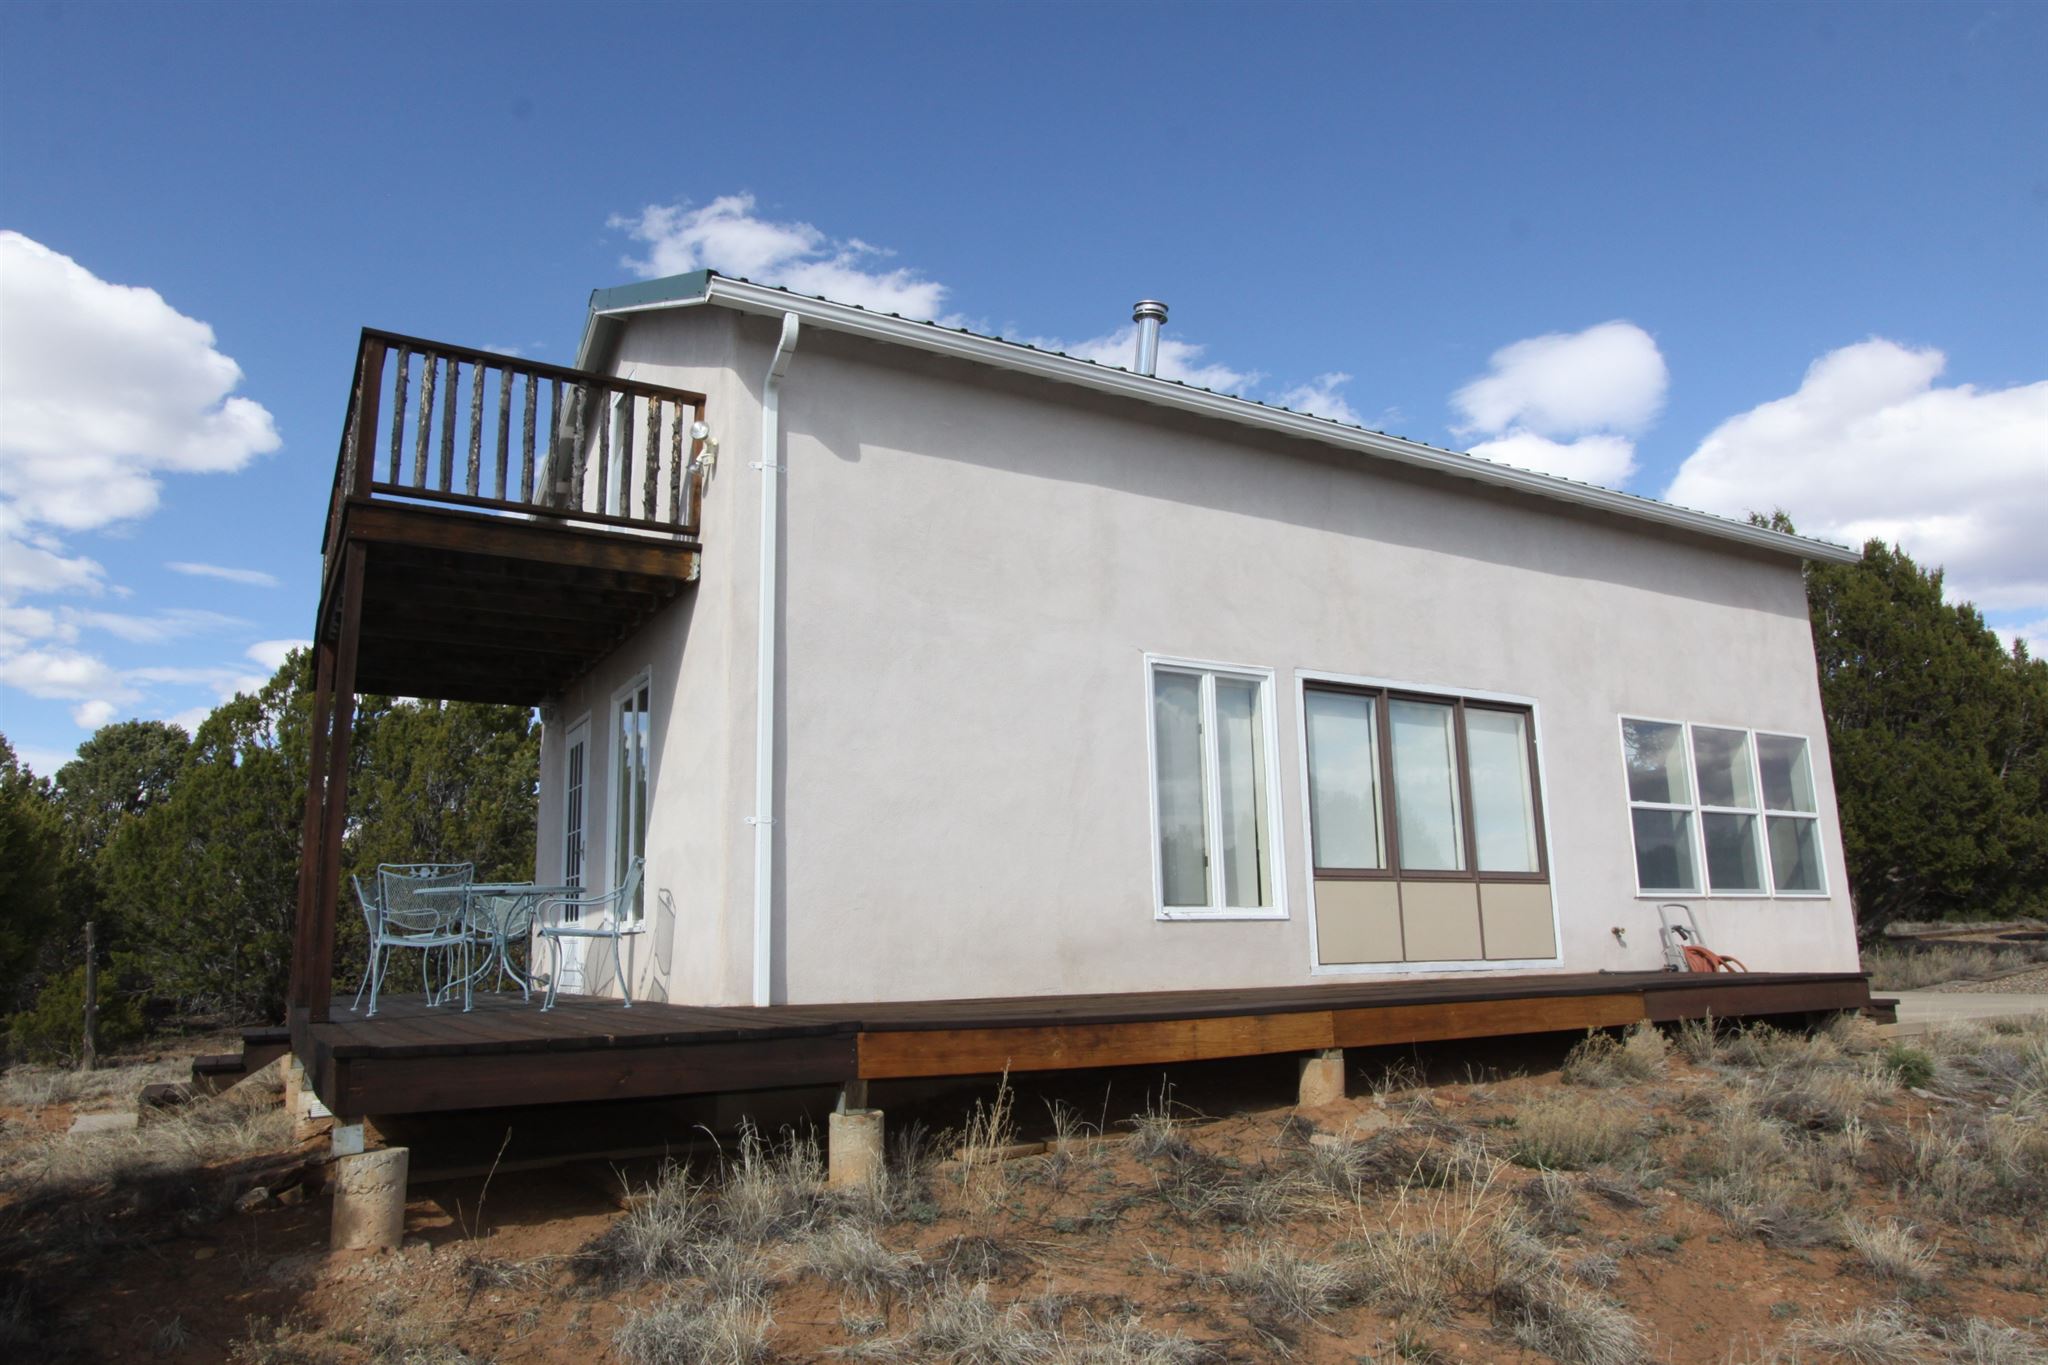 613 Apache Mesa, Las Vegas, New Mexico 87701, 2 Bedrooms Bedrooms, ,1 BathroomBathrooms,Farm,For Sale,613 Apache Mesa,202000716